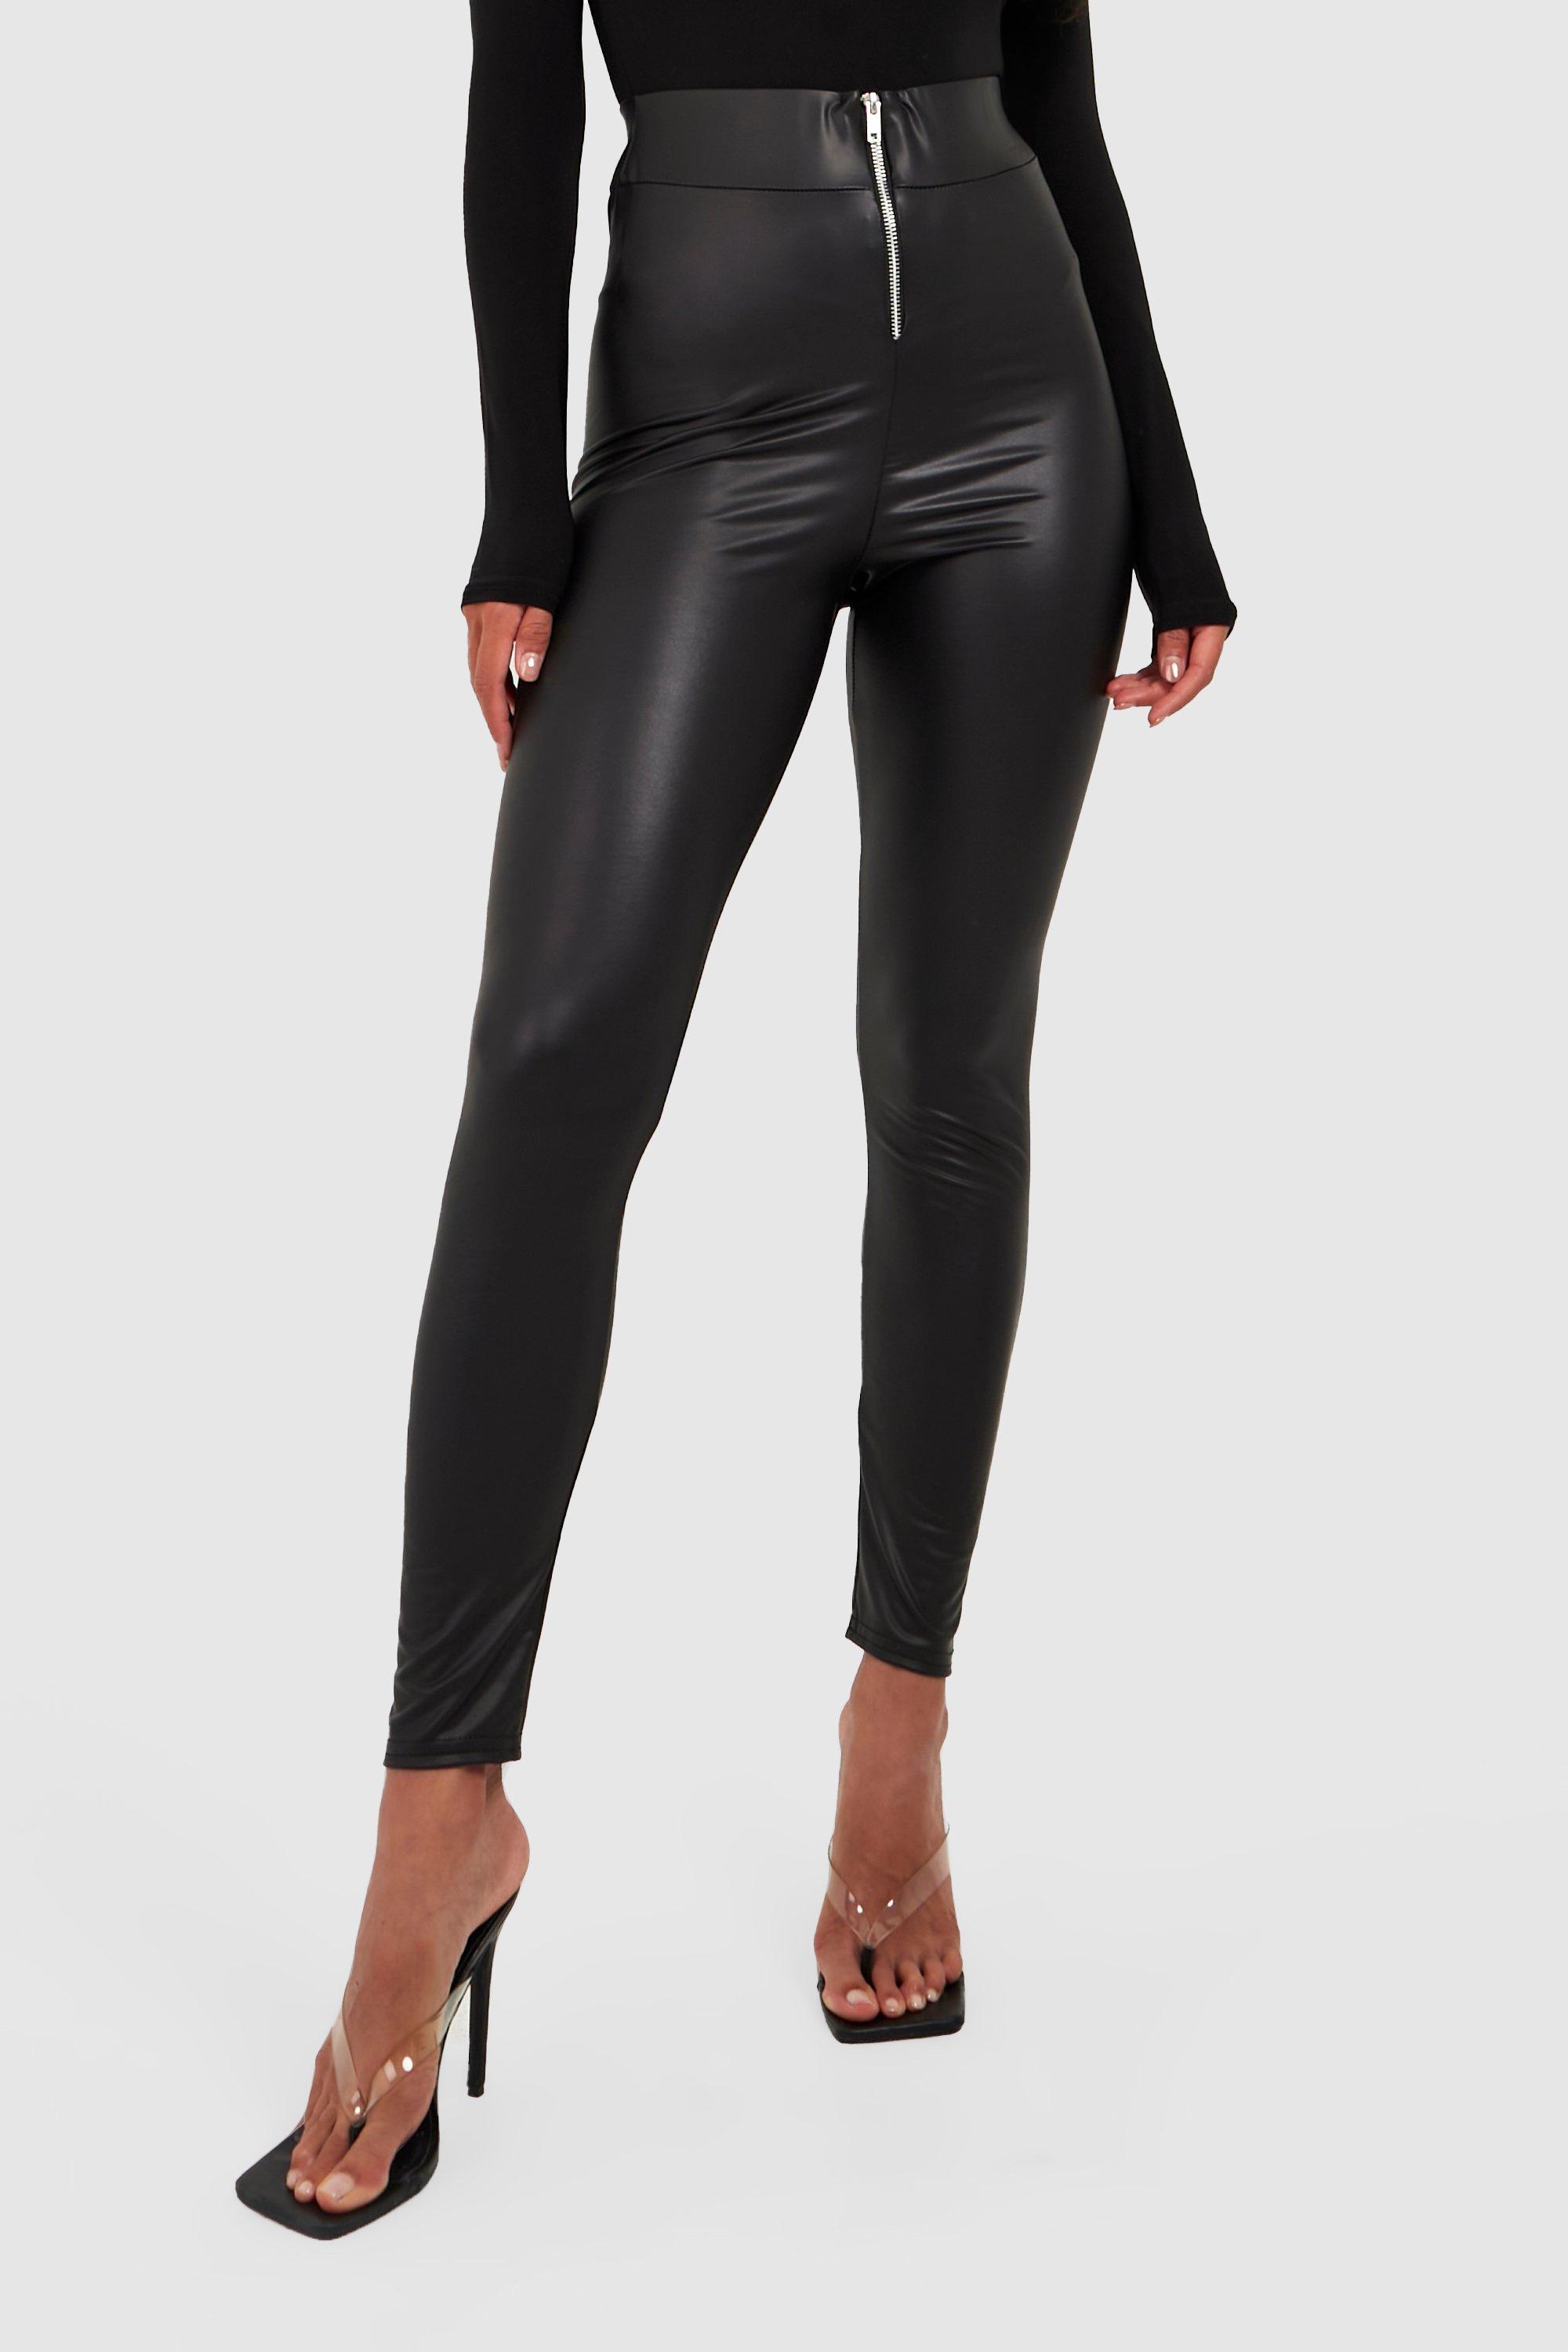 leggings sexy high waist zip wetlook-black